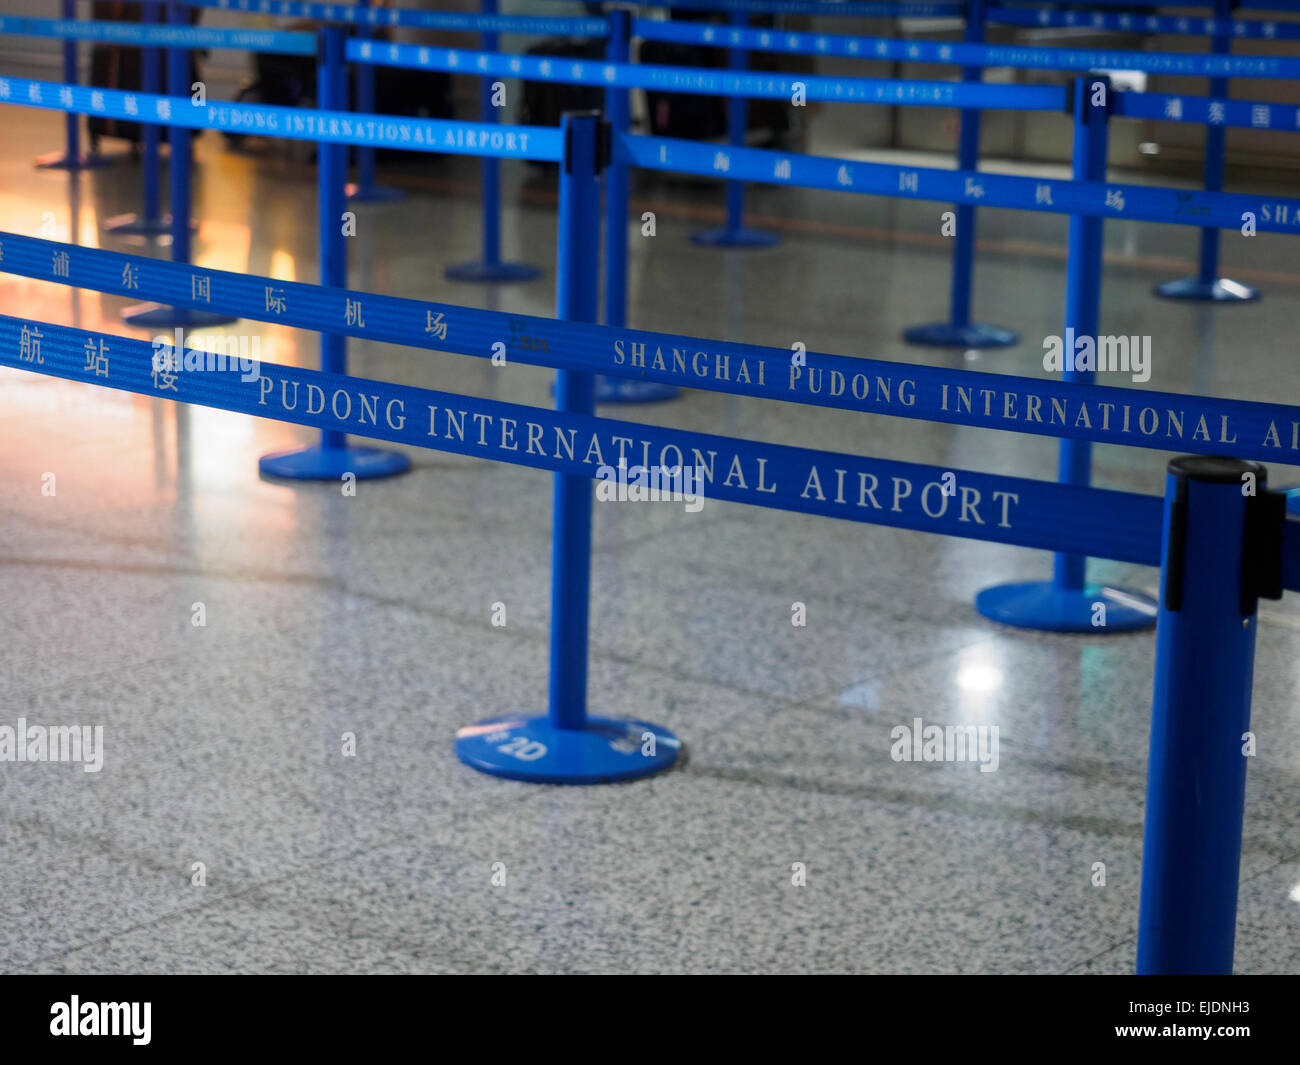 Pudong international airport in Shanghai, China Stock Photo